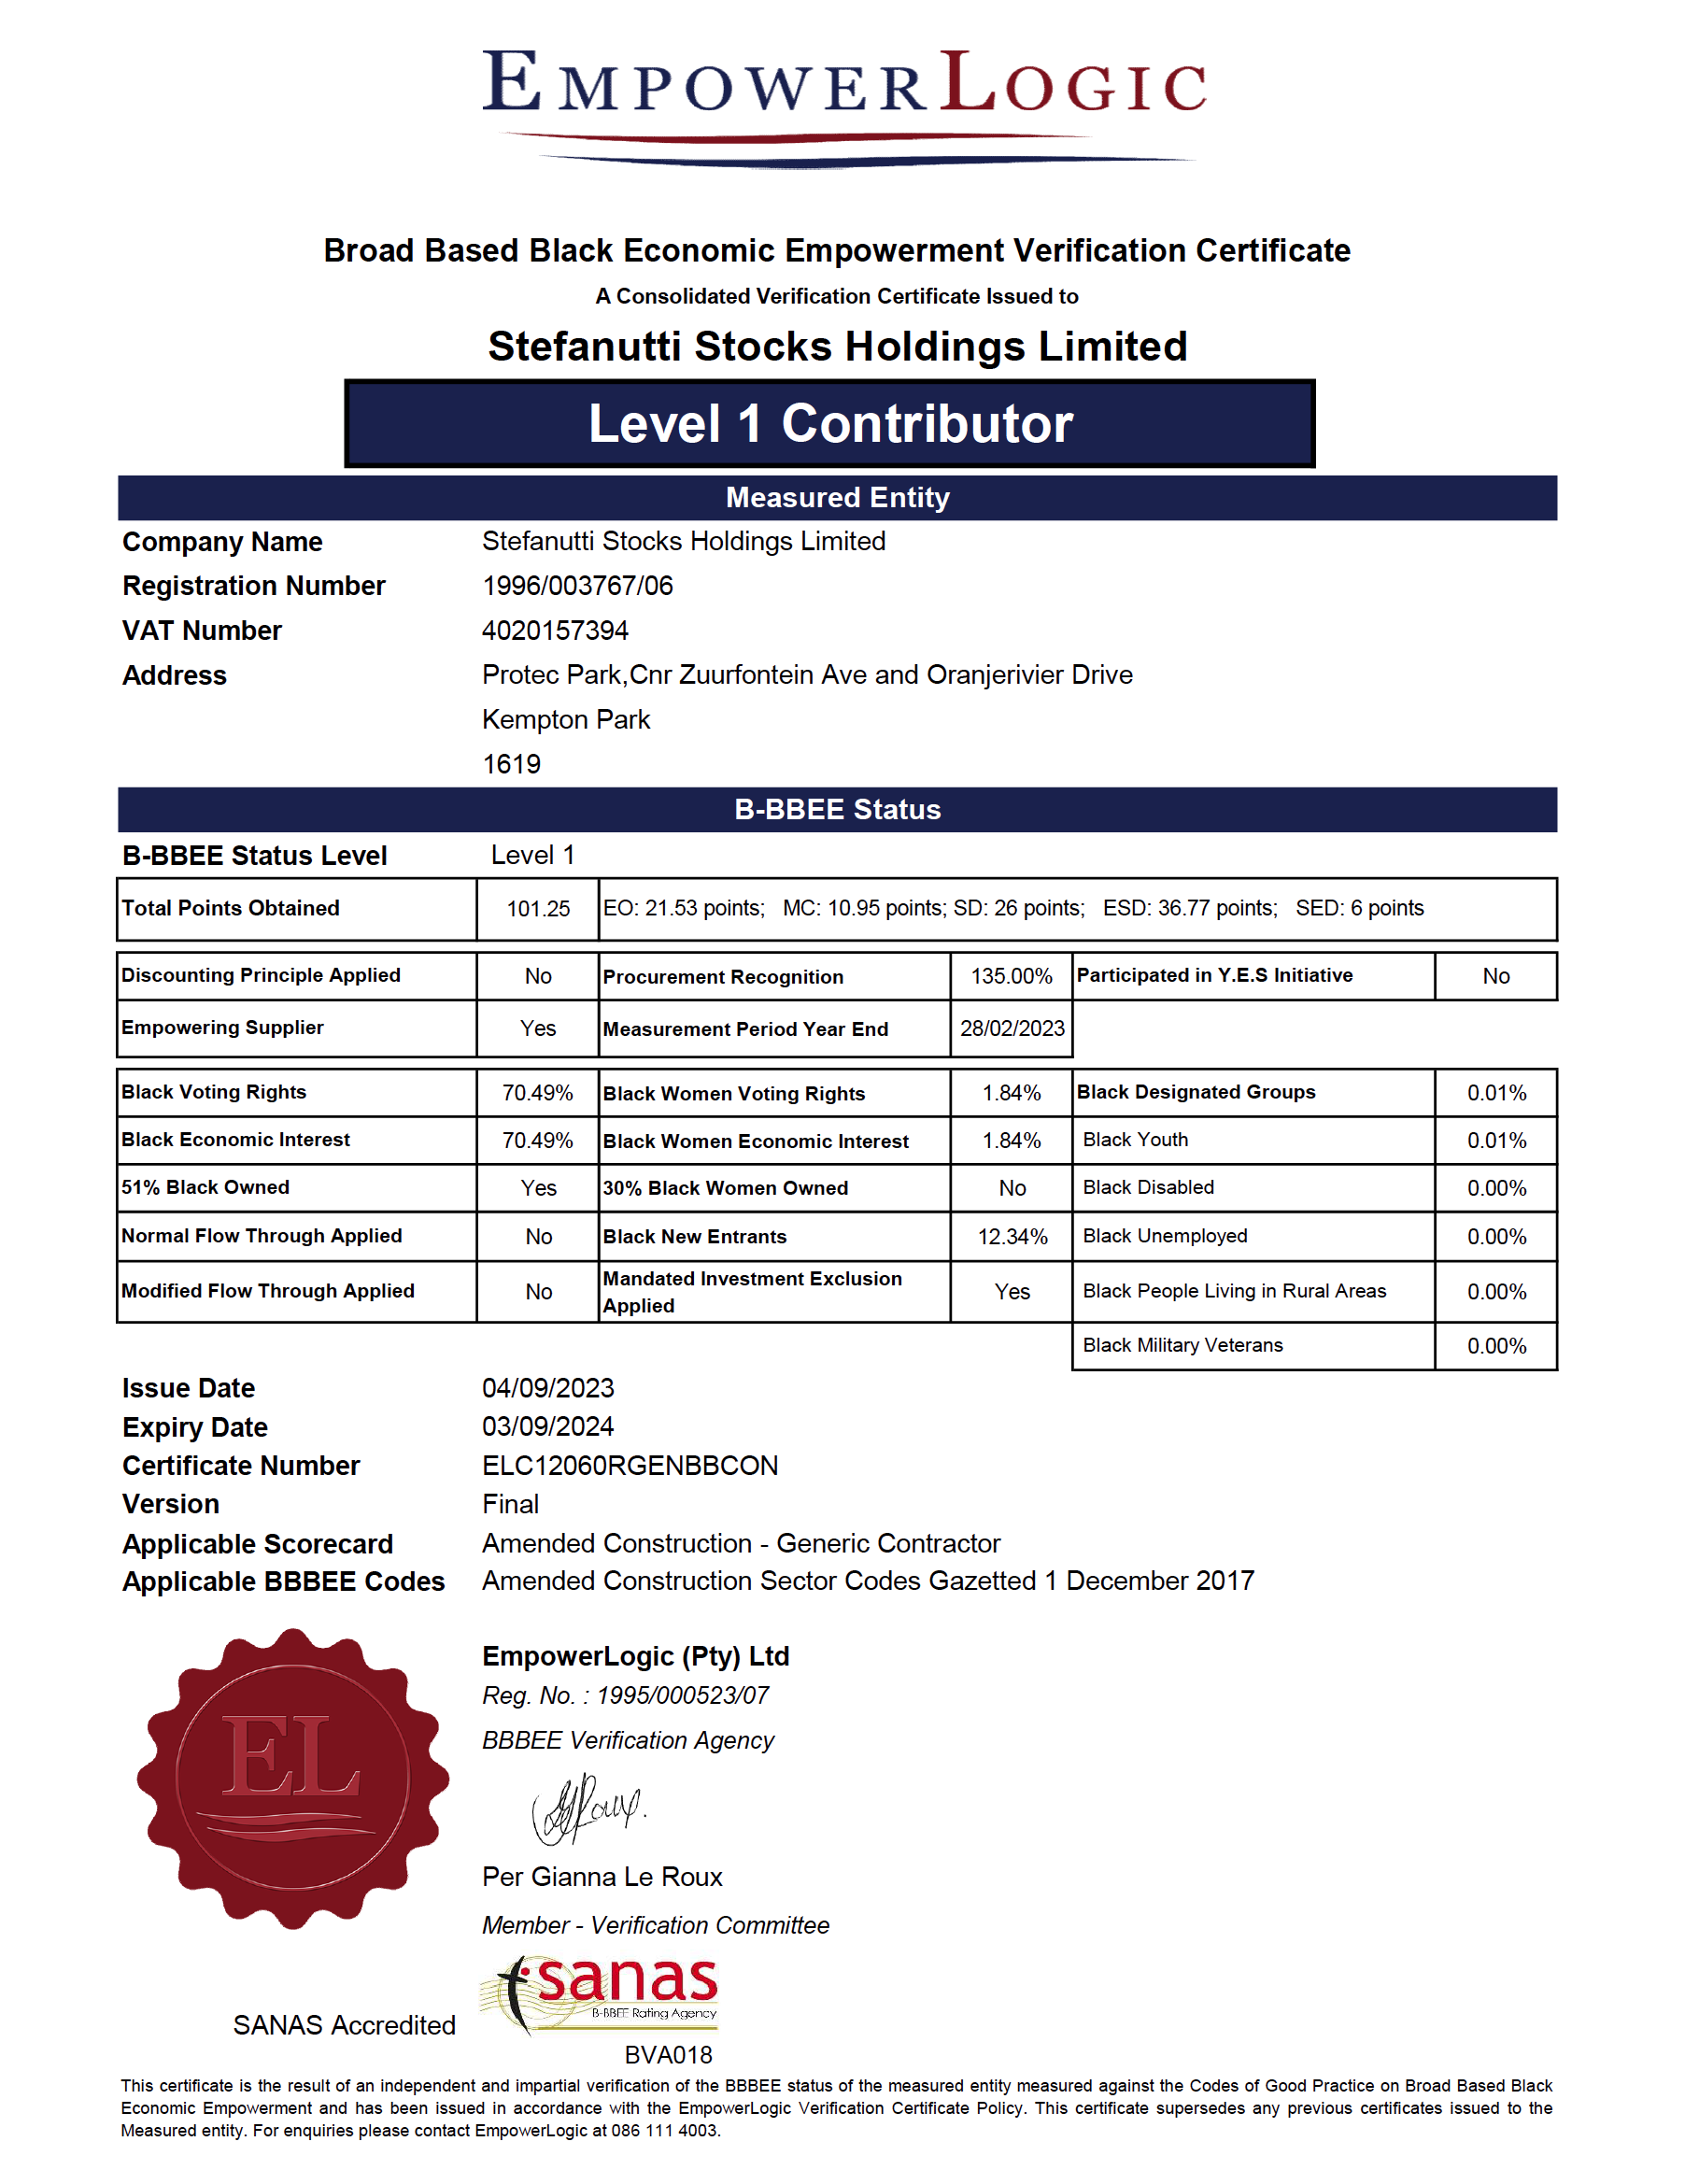 Stefanutti Stocks Holdings Limited-B-BBEE Certificate